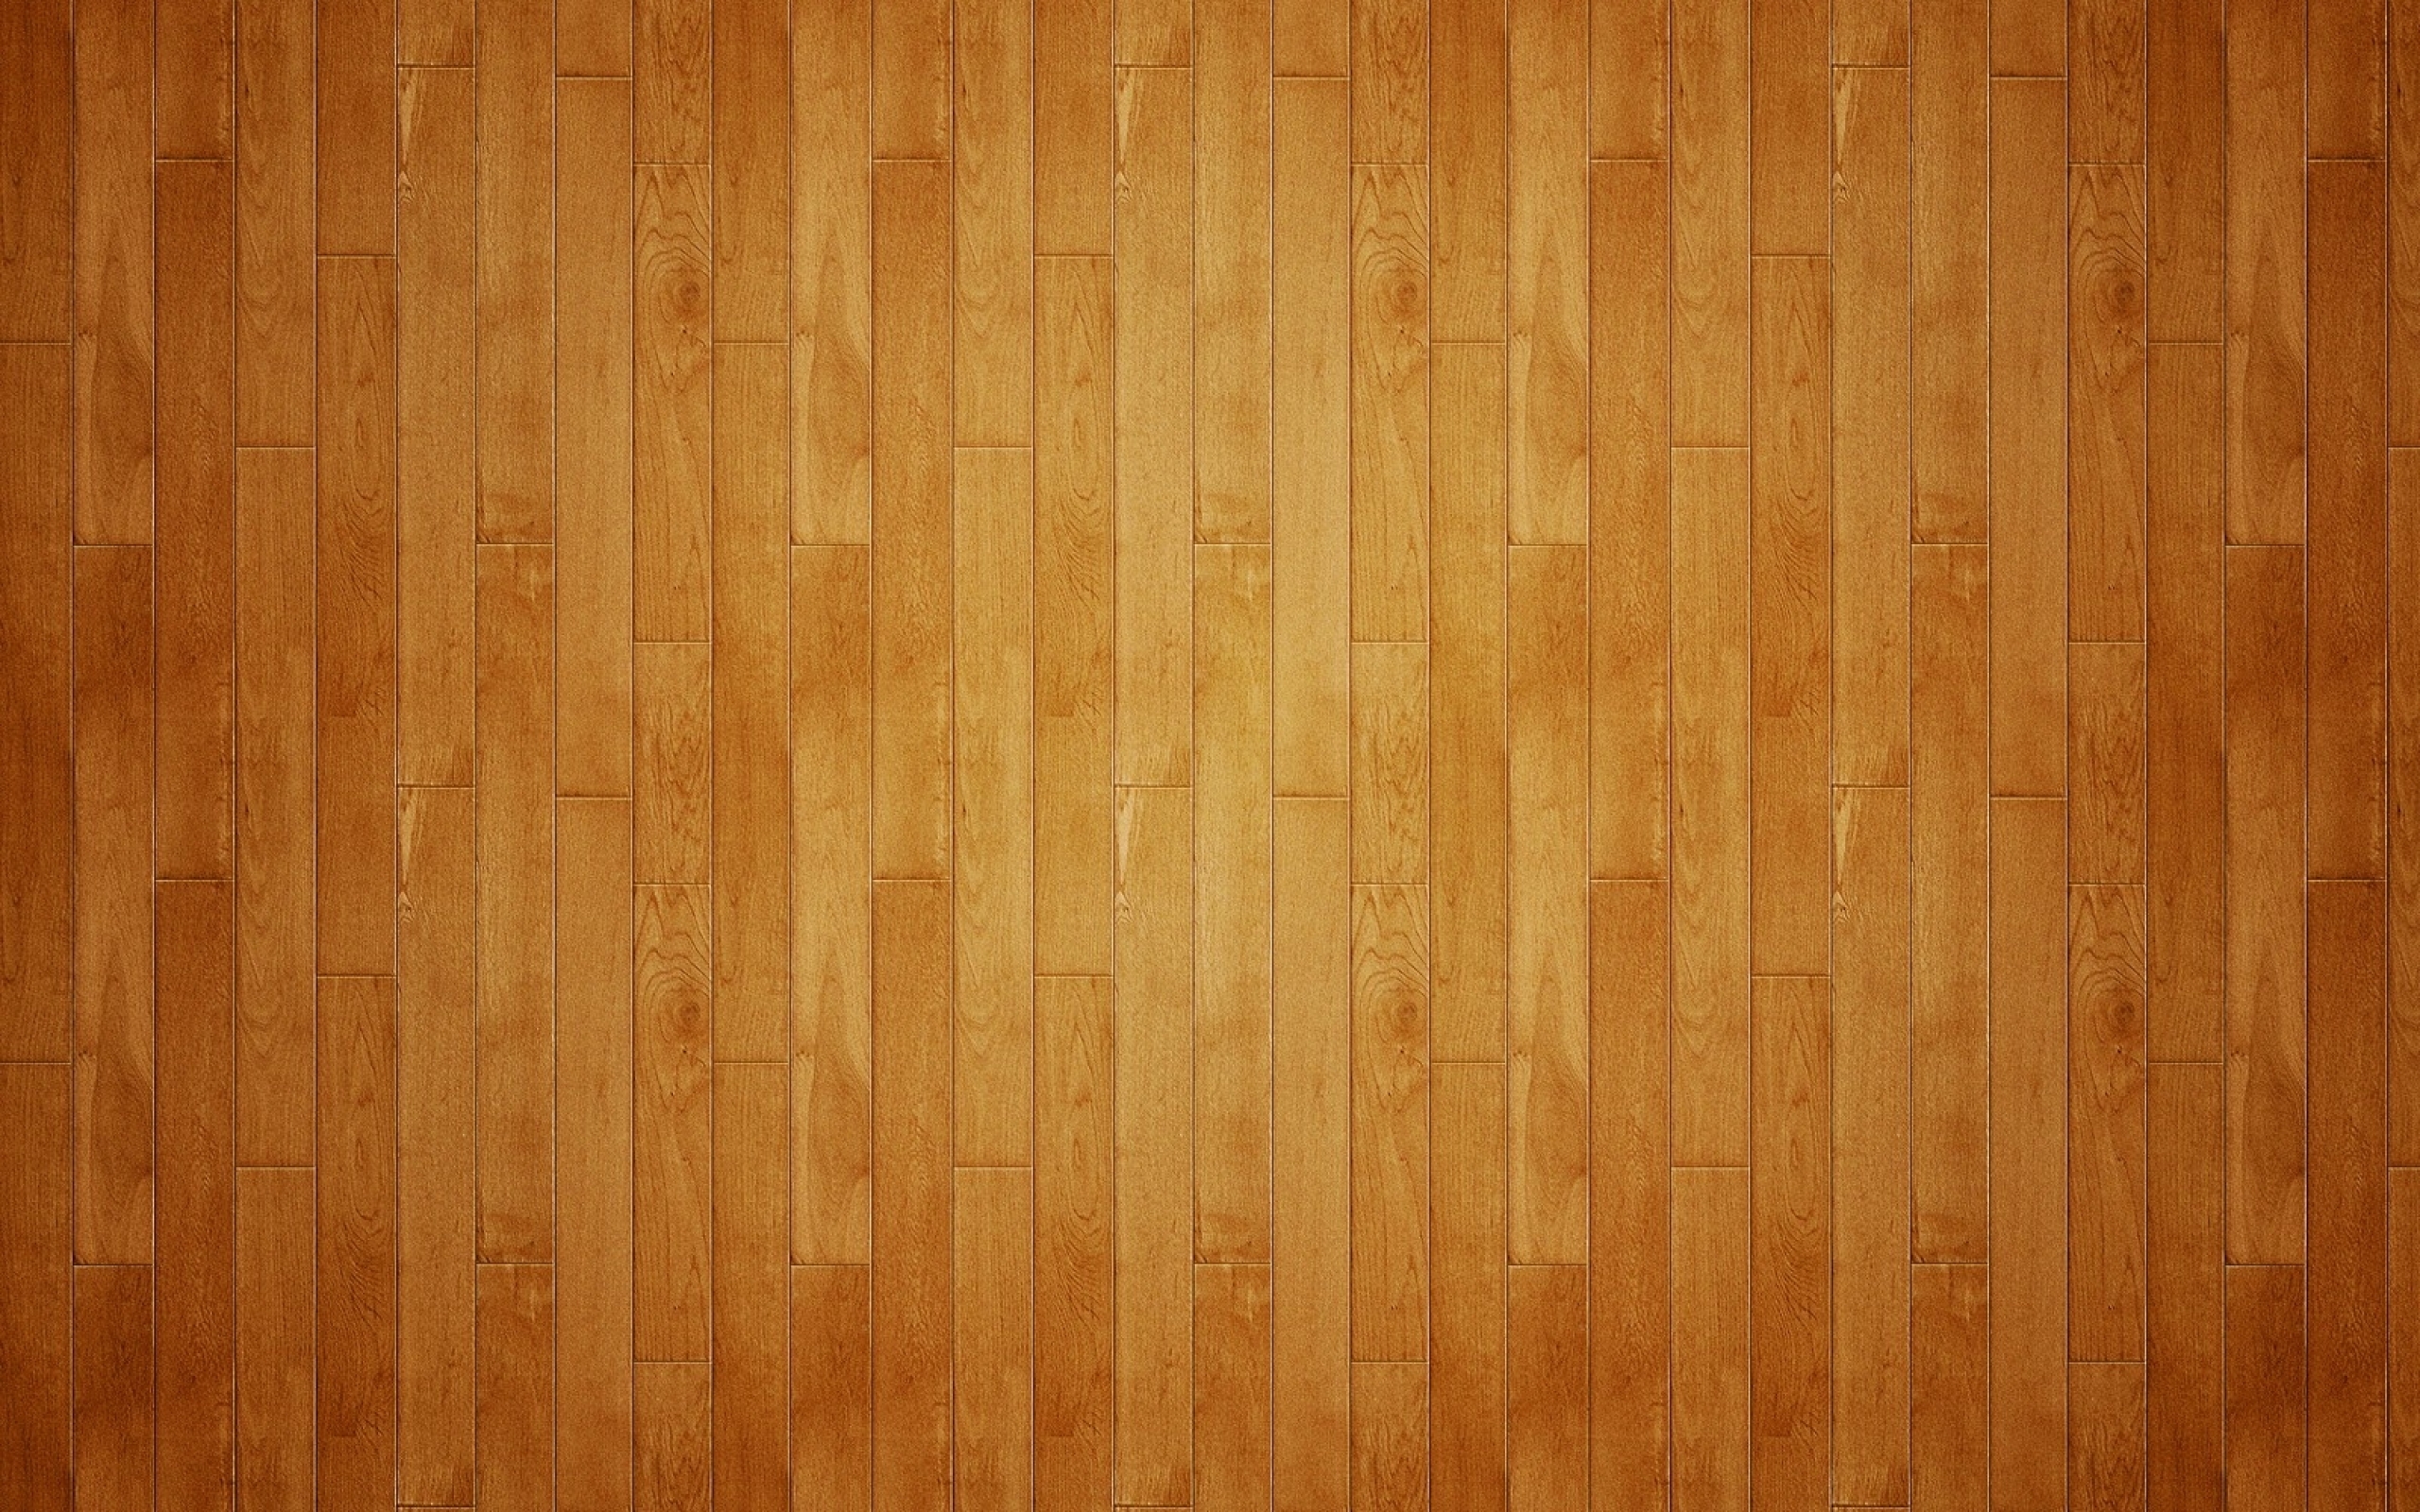 Wooden Texture Image